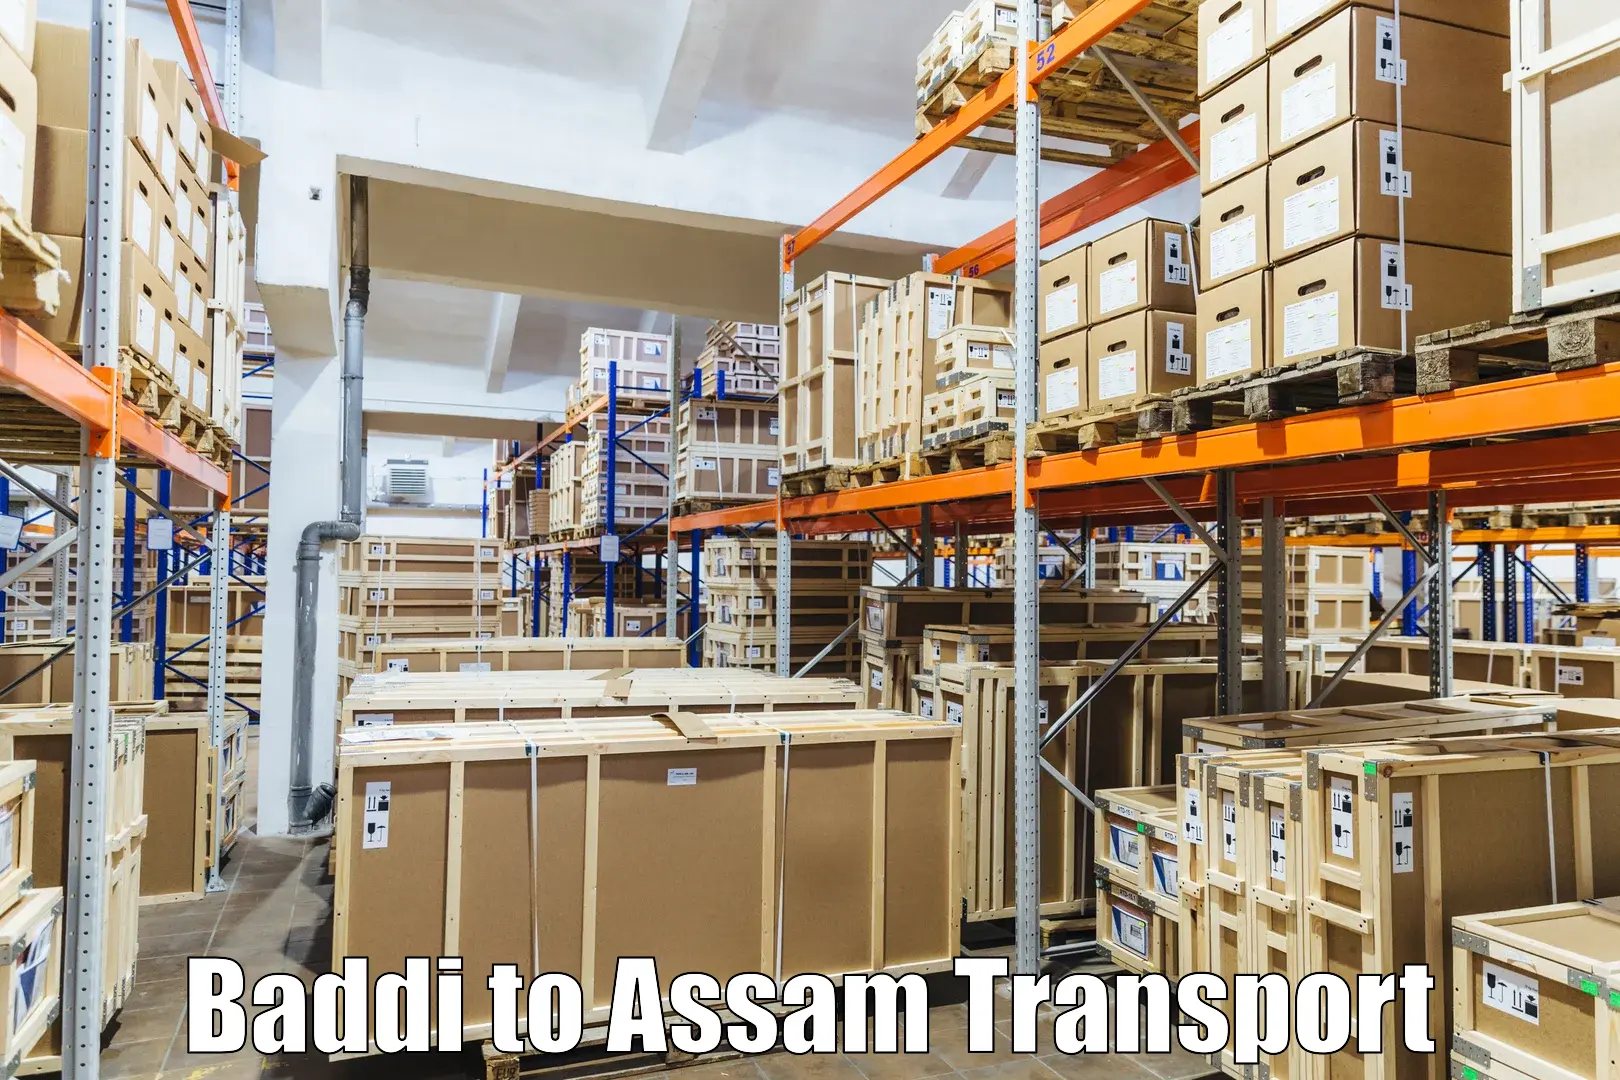 Truck transport companies in India Baddi to Lala Assam